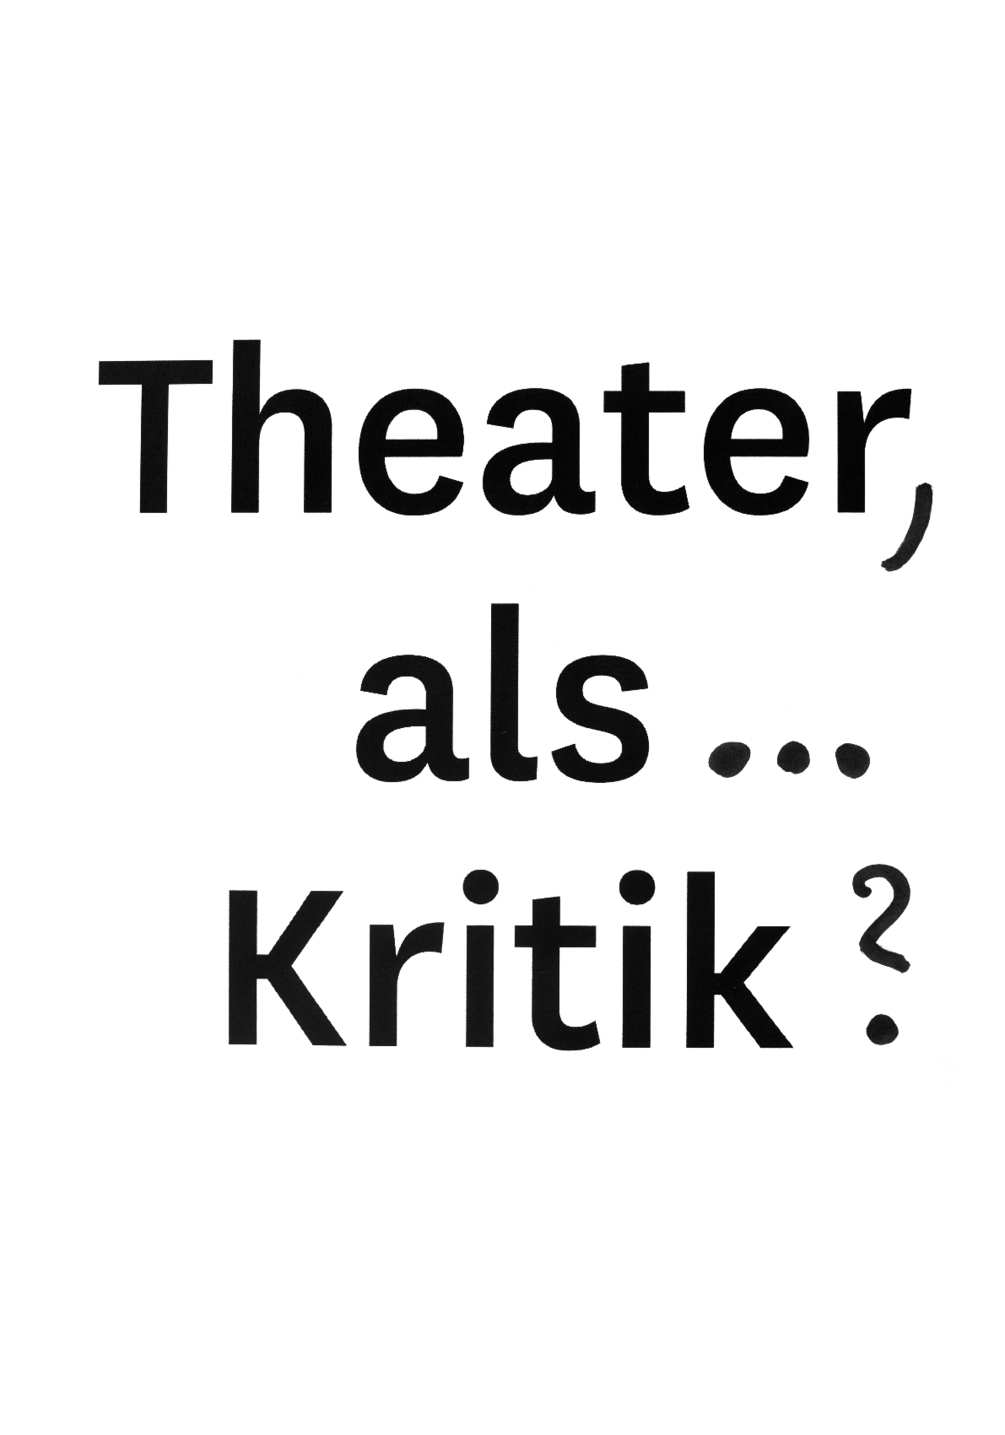 theater-as-critique-slip-03-1005x1435px